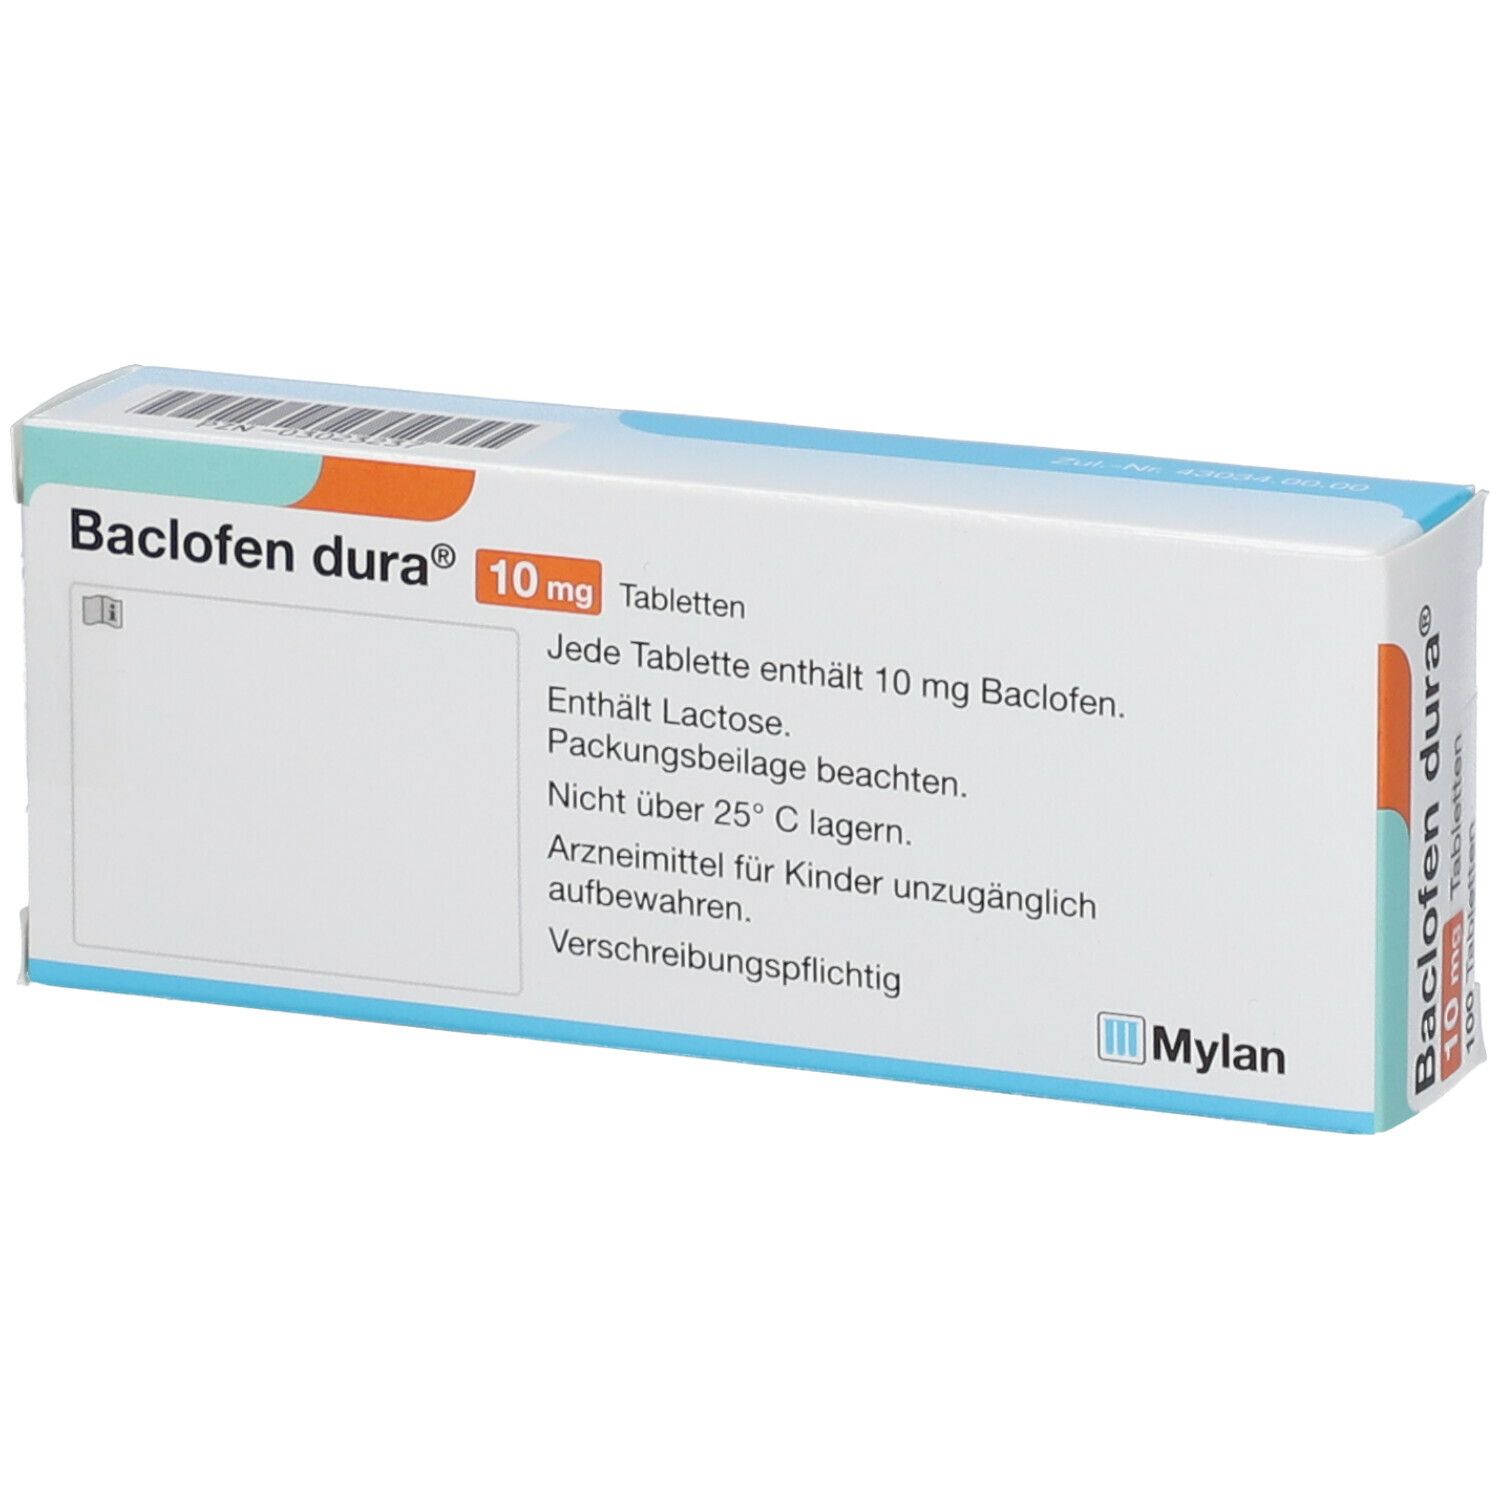 Baclofen dura® 10 mg